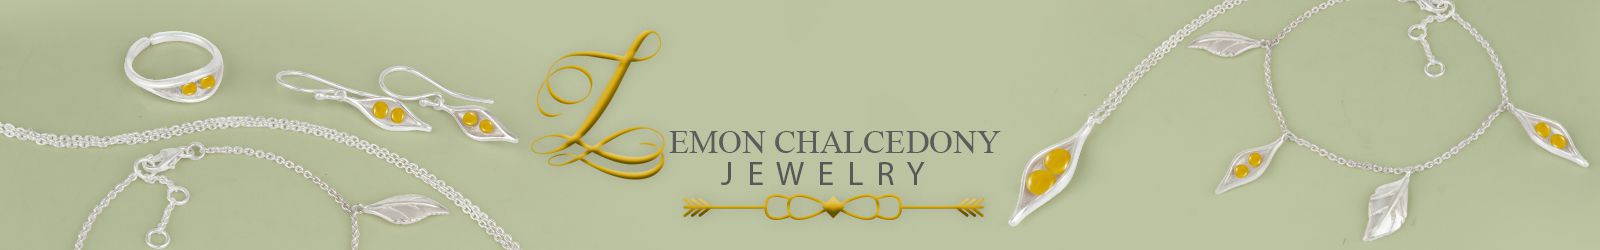 Silver Lemon Chalcedony Jewelry Wholesale Supplier